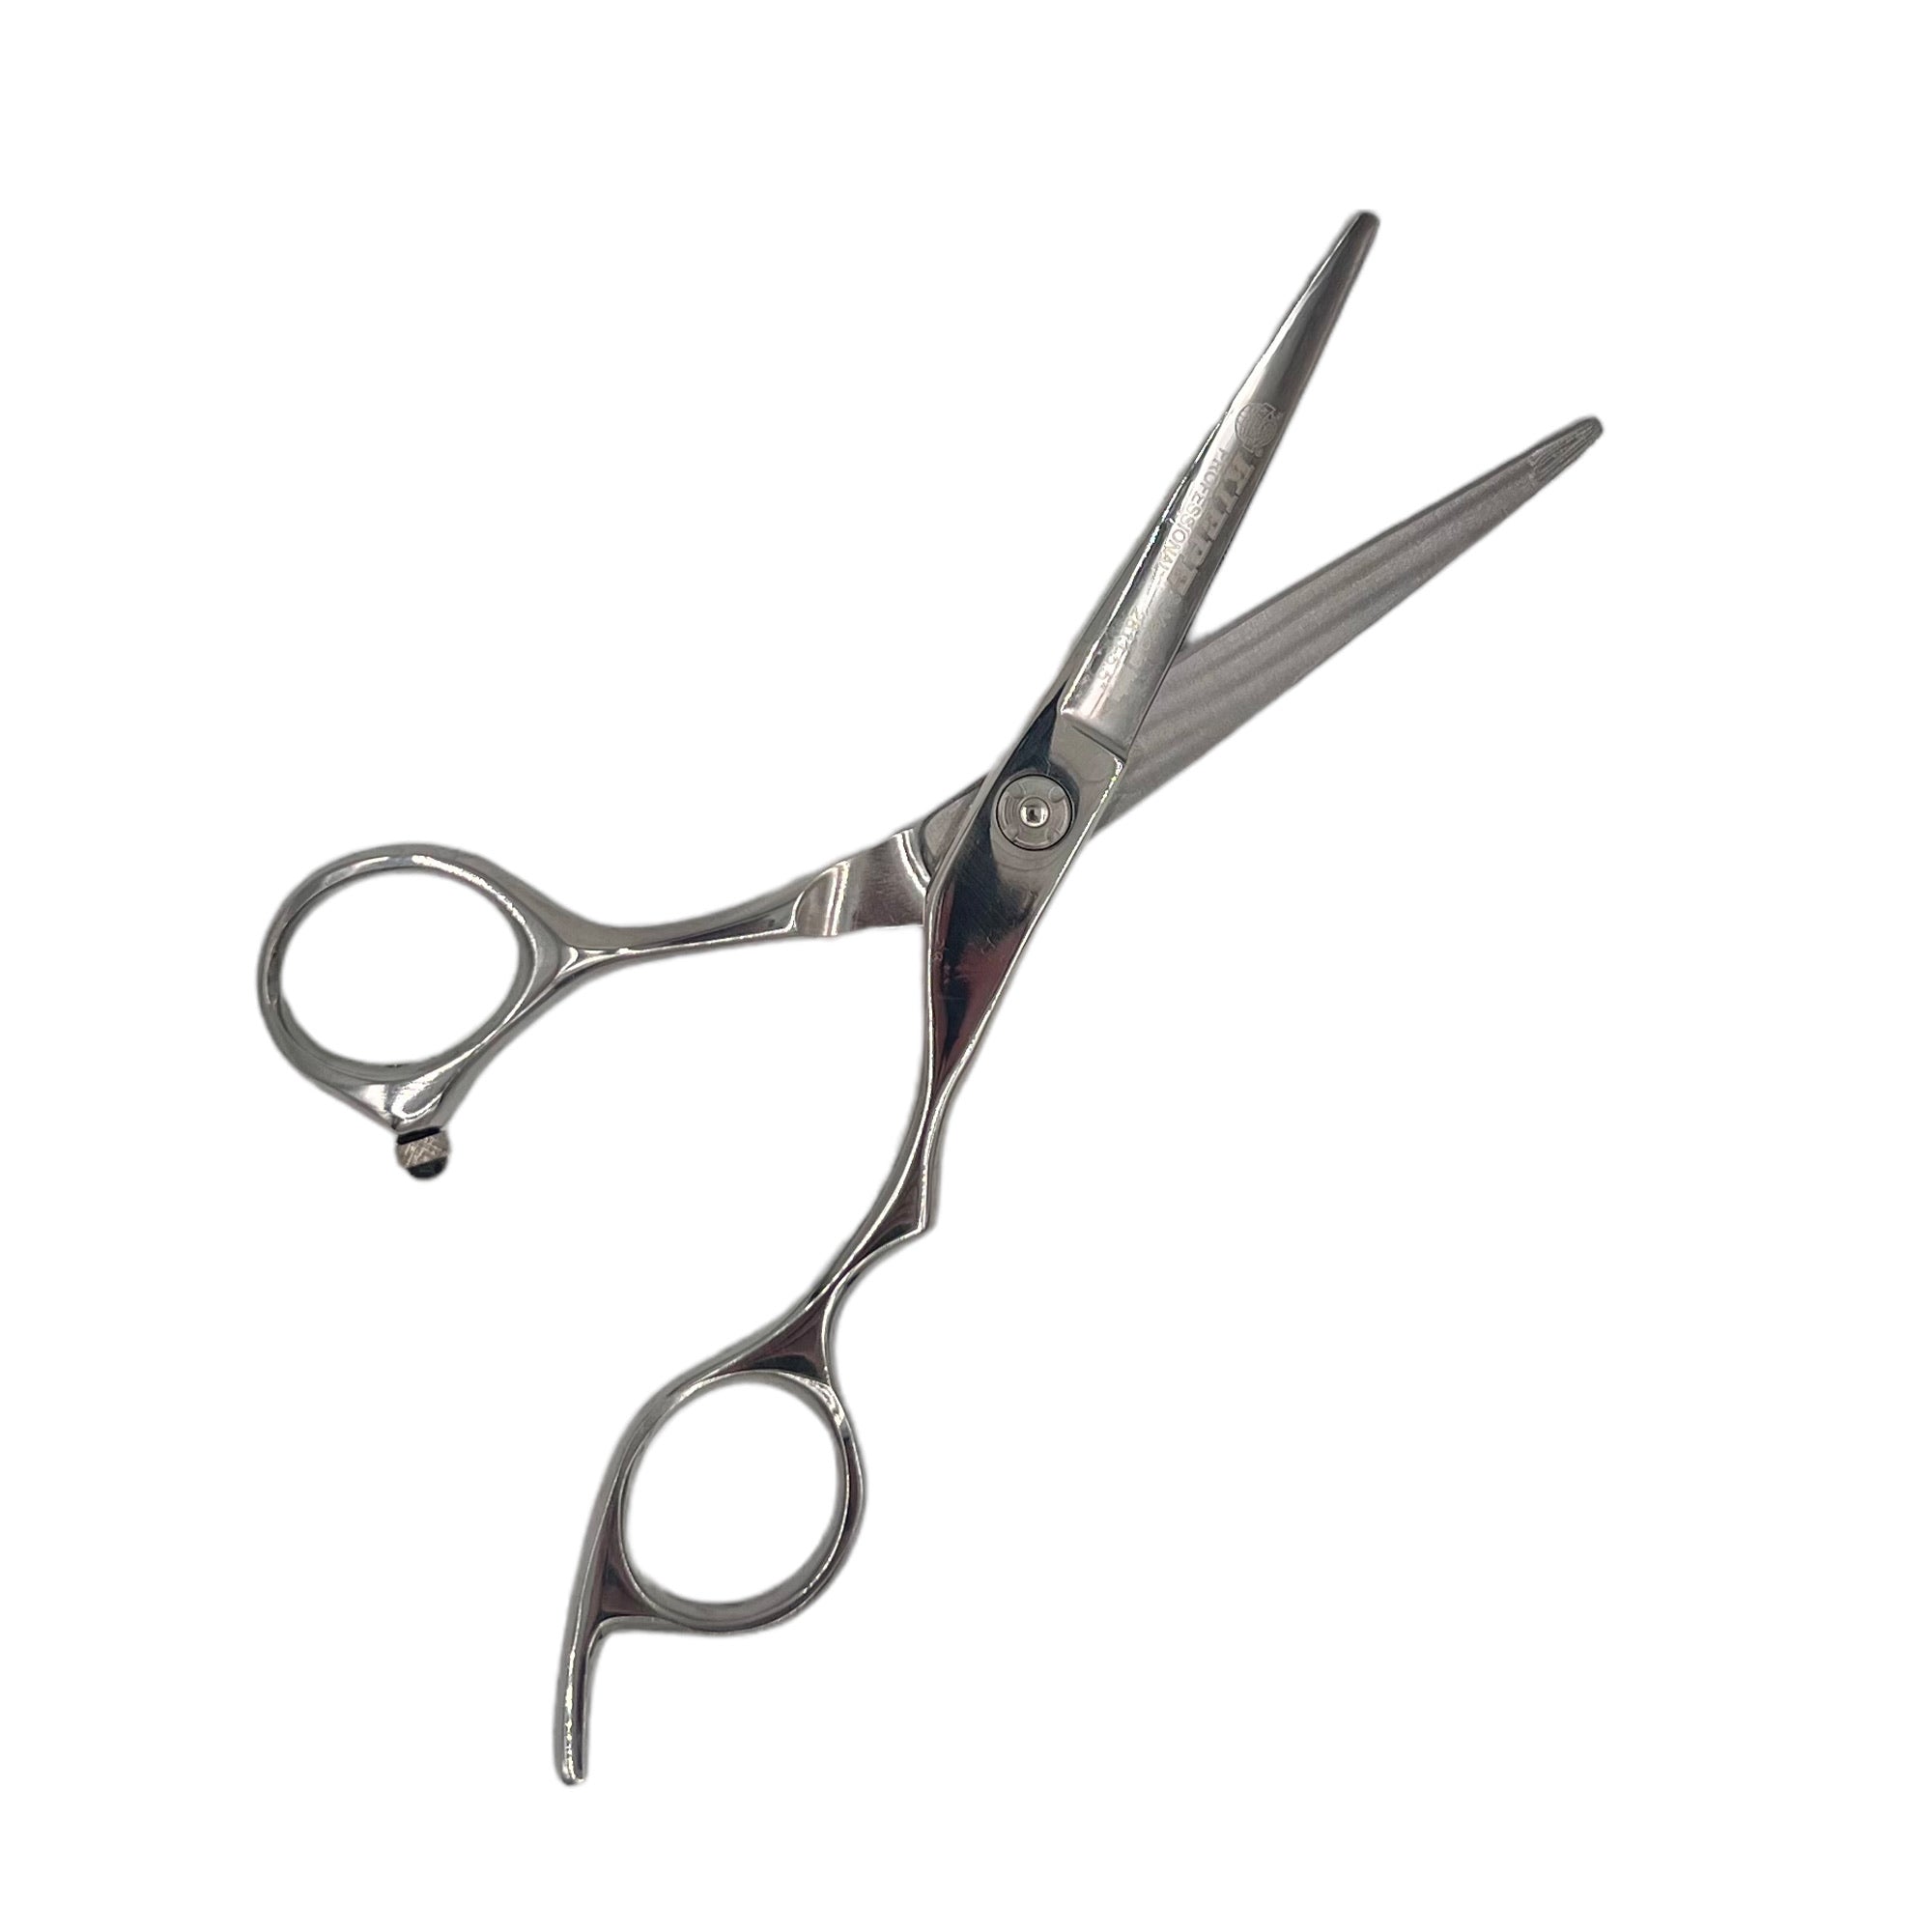 Kiepe - 2813 Hairdressing Scissors Series Monster Cut Razor Edge Wire Semi Offset 5.5 Inch (14cm)